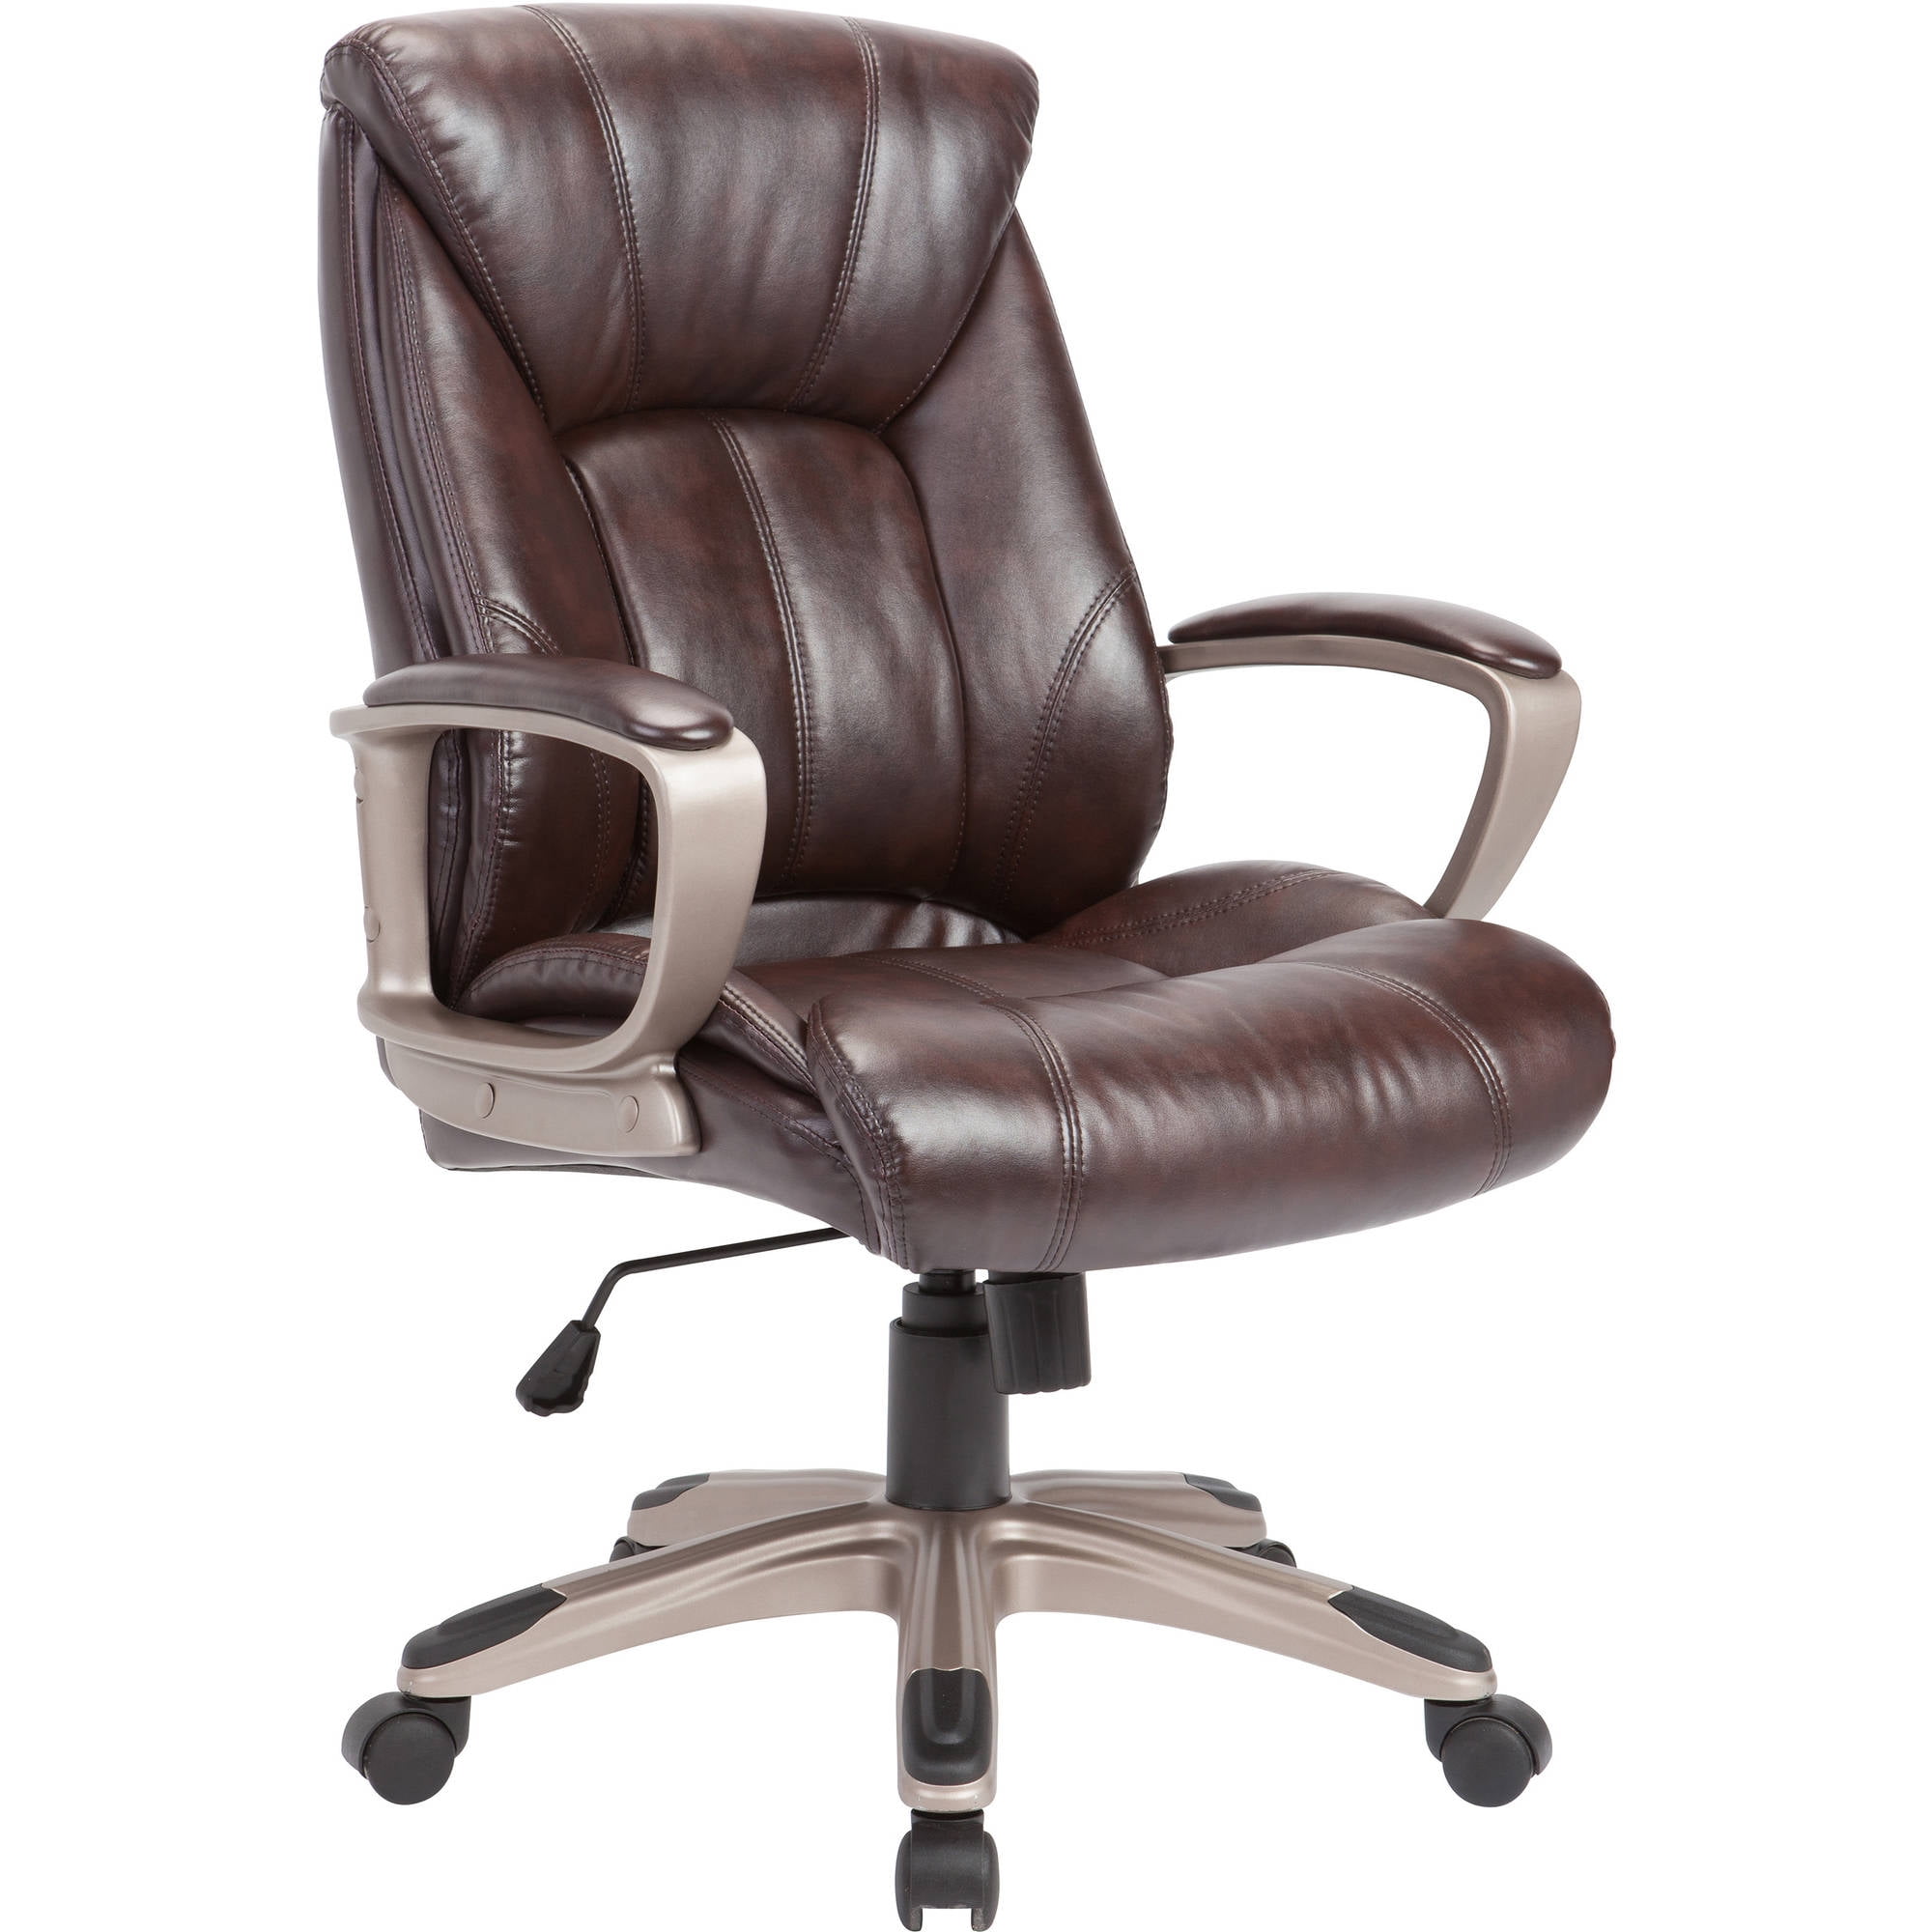 AC Pacific Adjustable Swivel Office Chair, Brown - Walmart.com